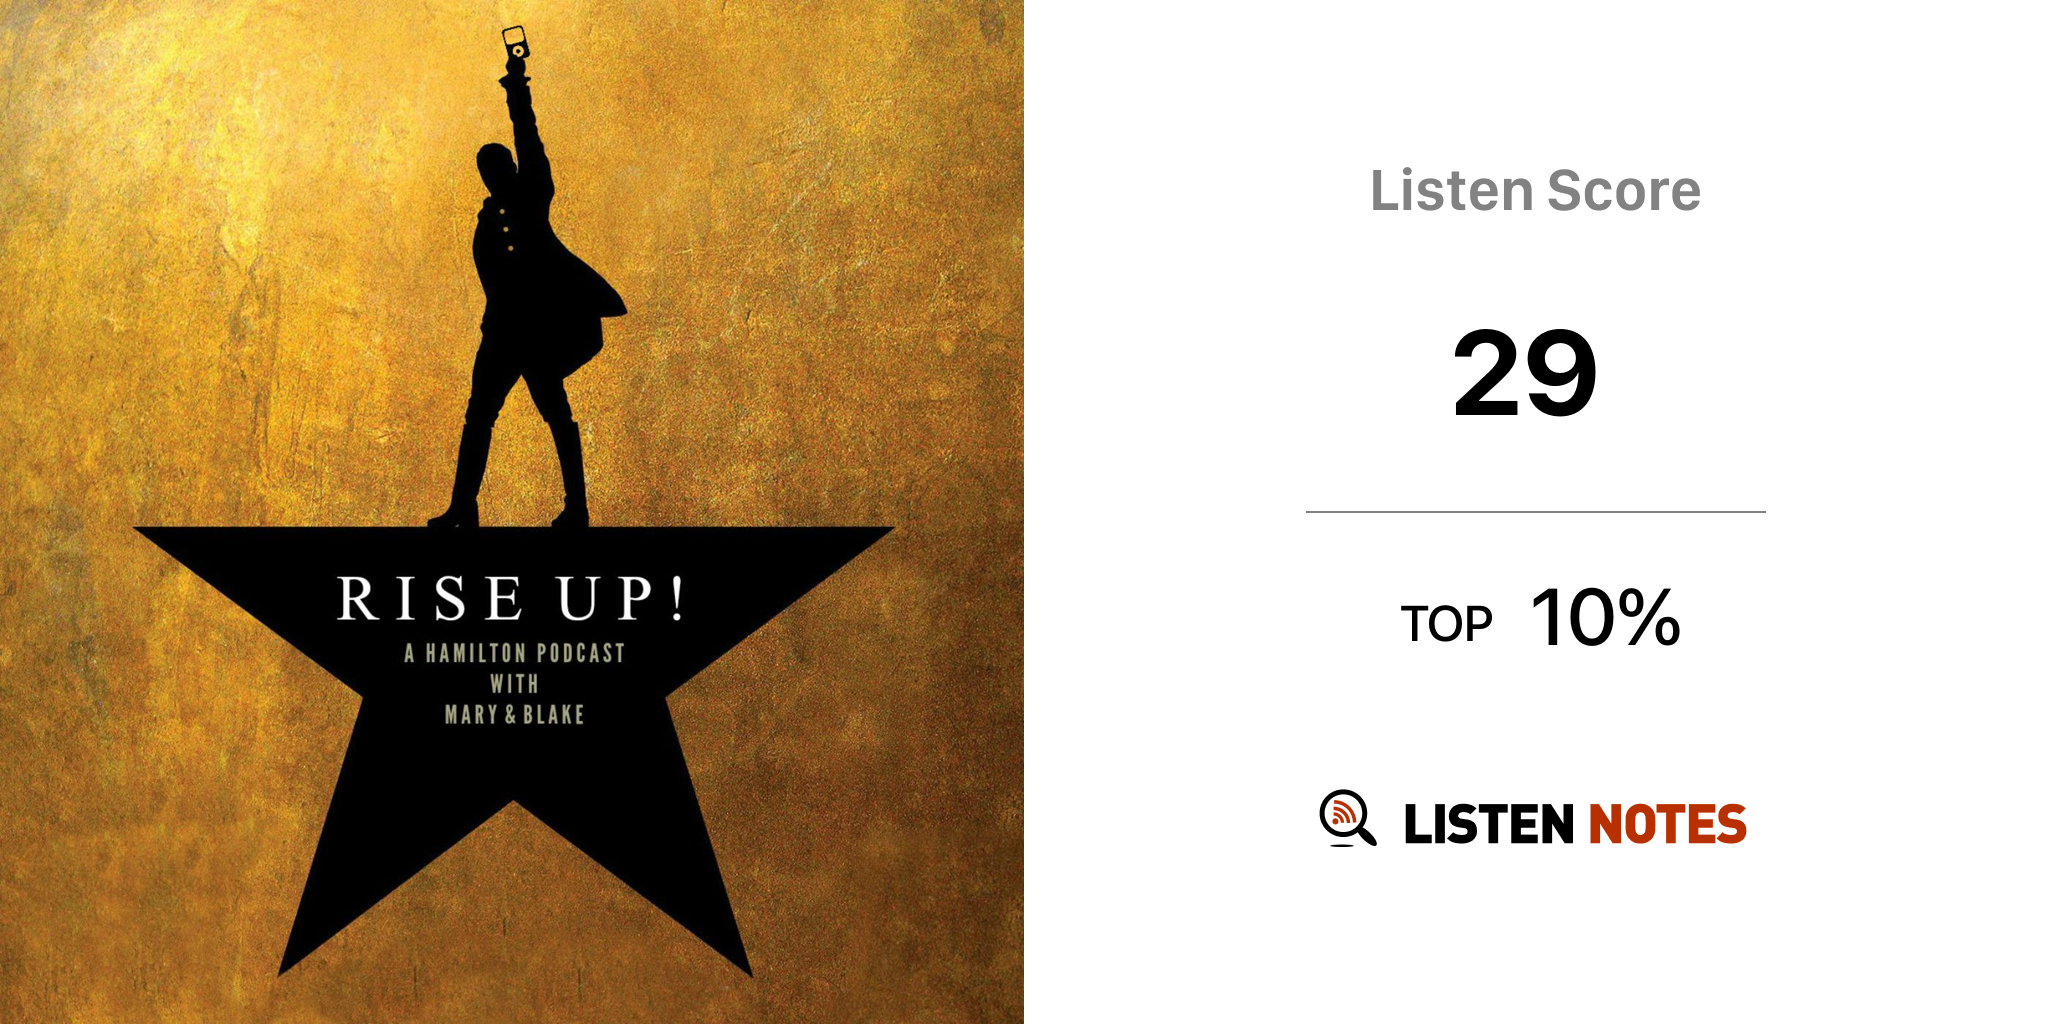 Rise Up: A Hamilton Podcast